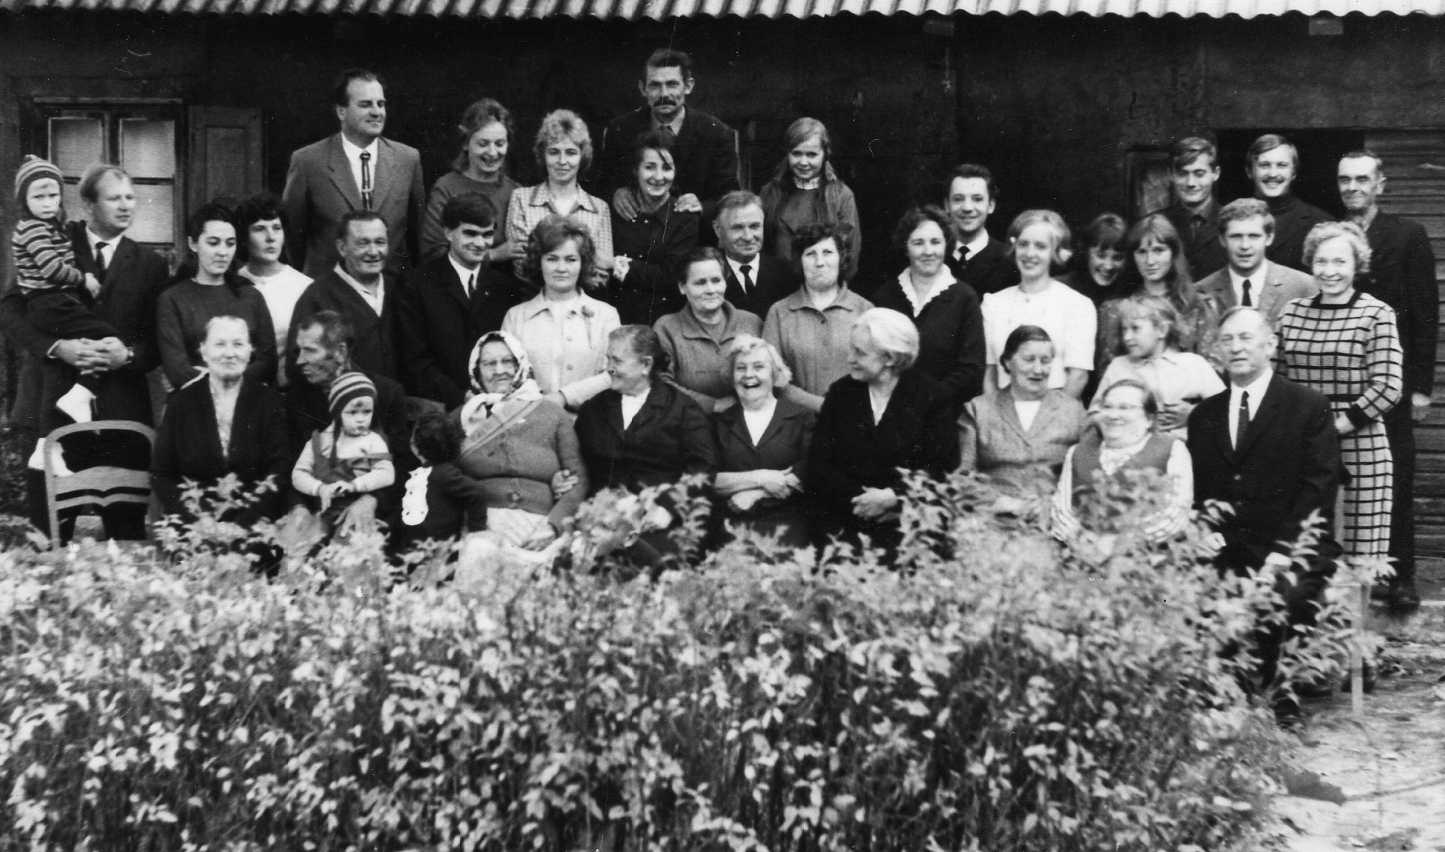  Vasinauskų šeima. 1972 m.